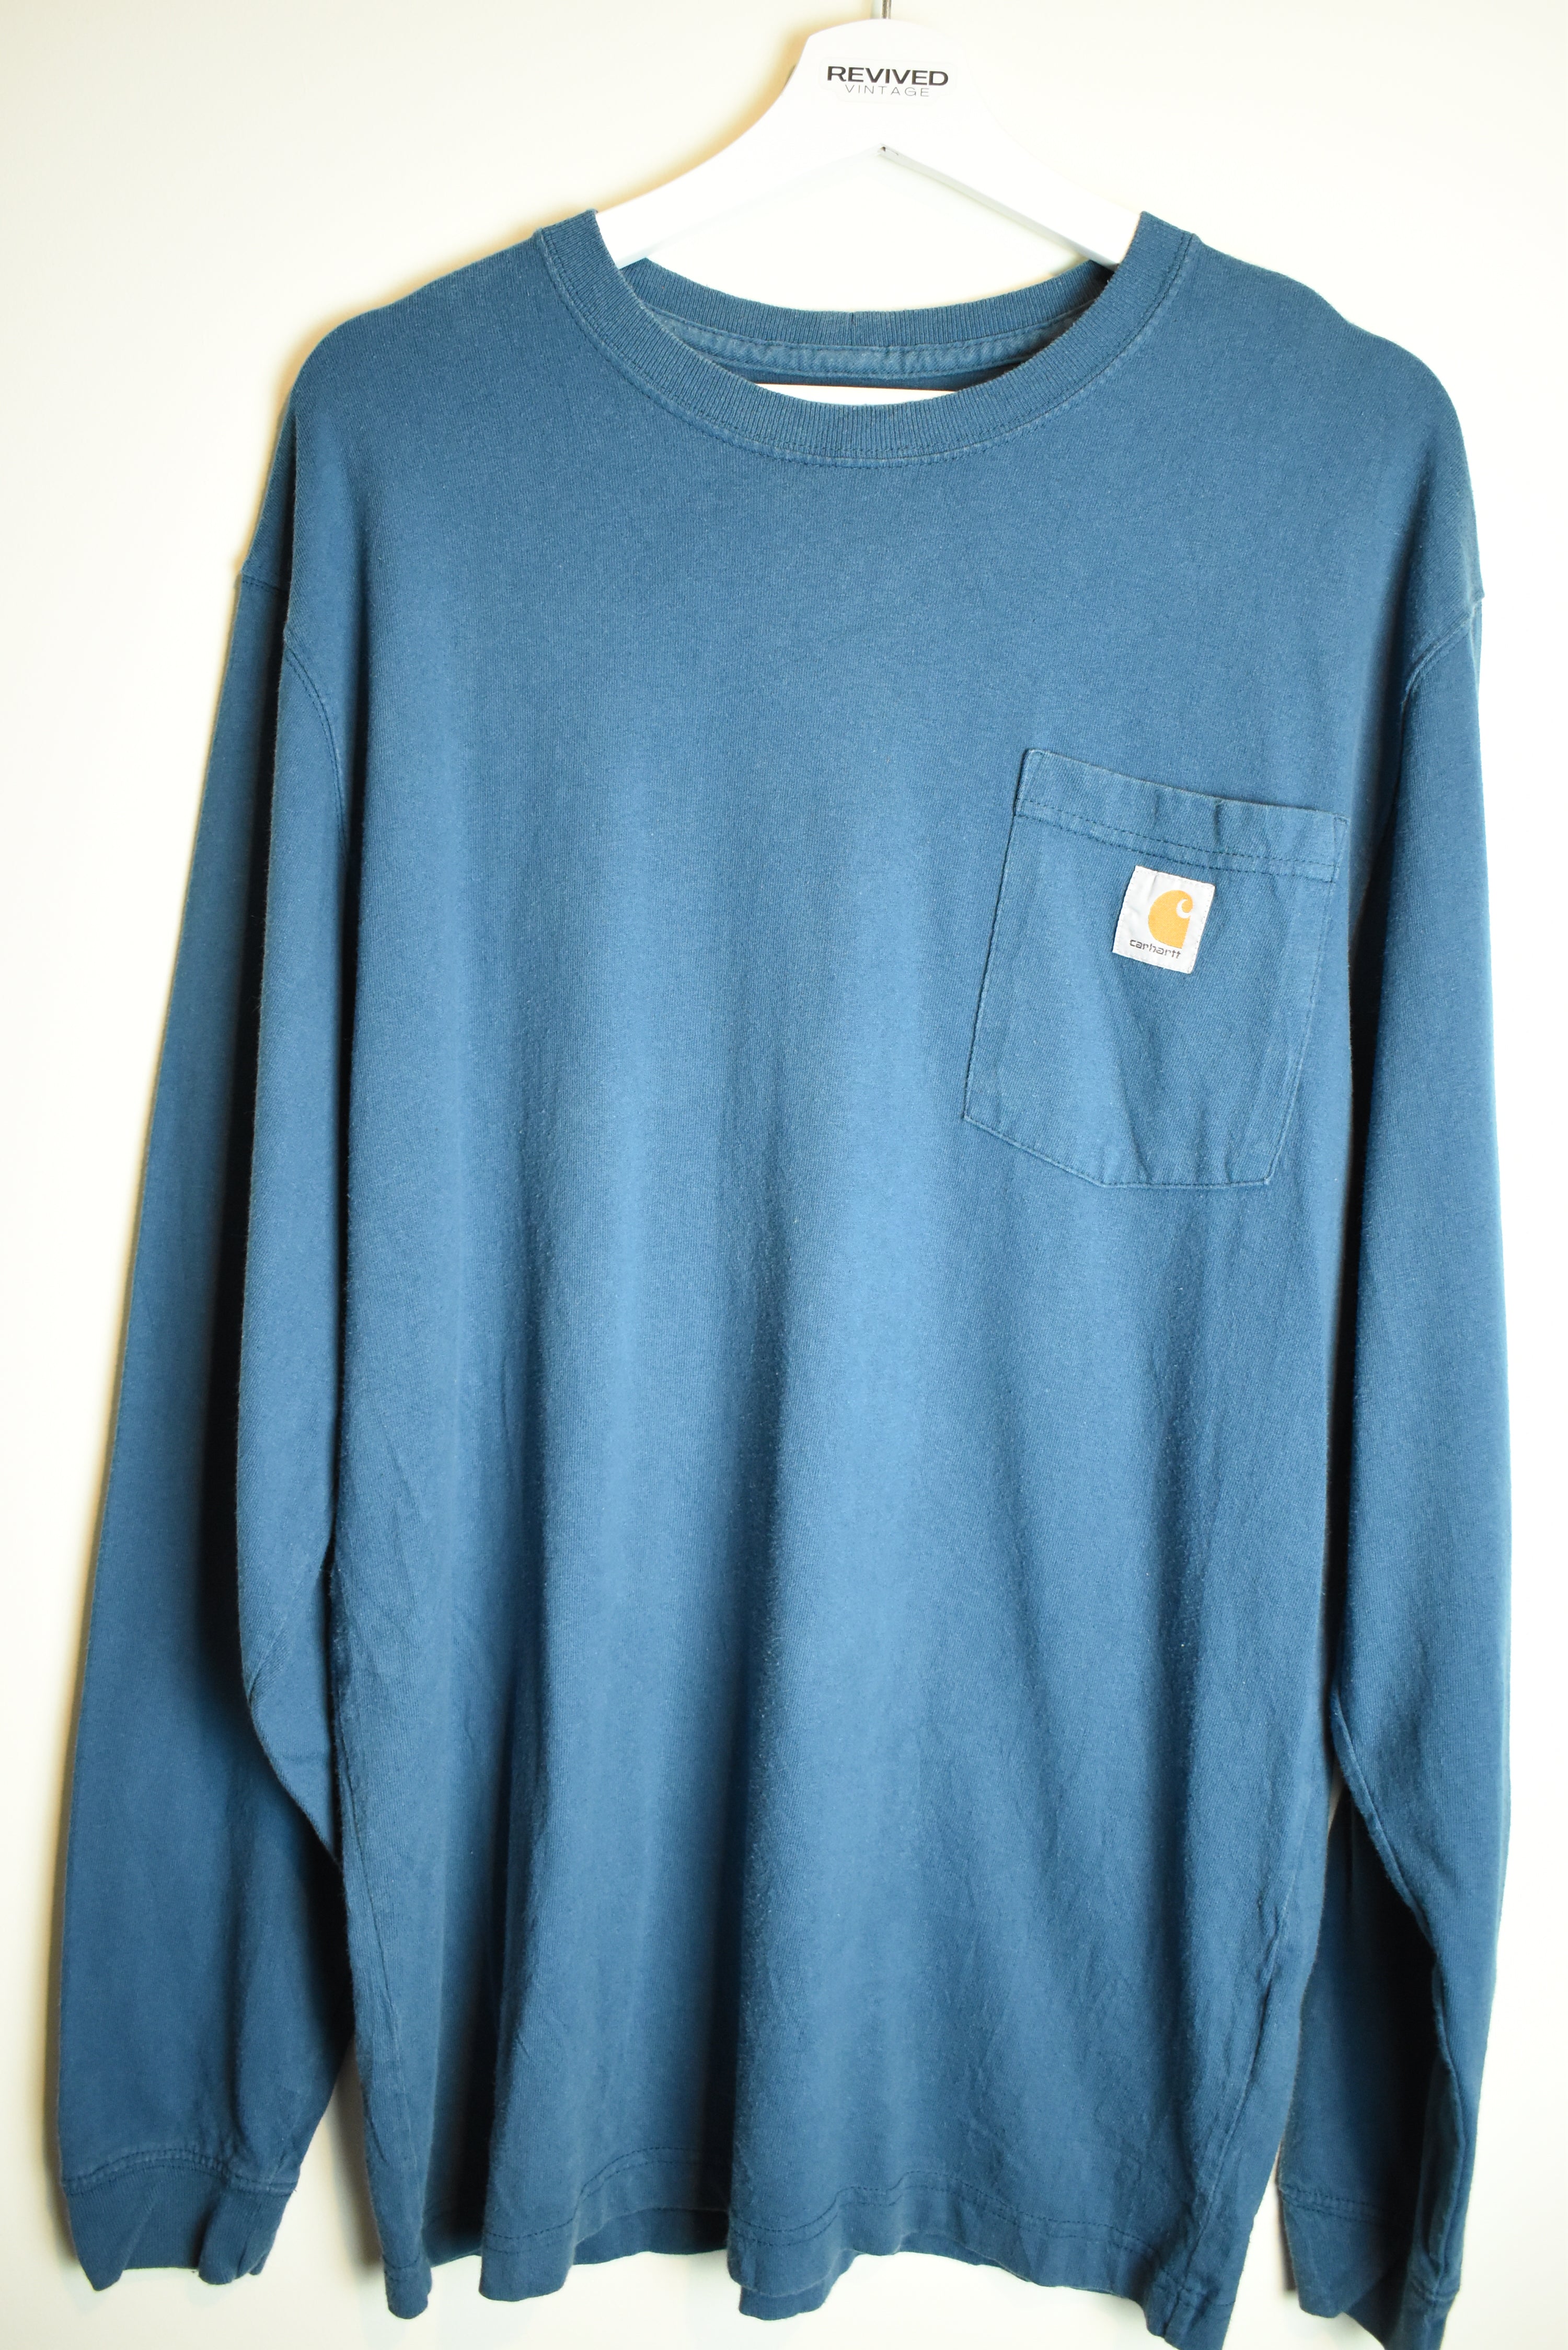 Vintage Carhartt Blue Long Sleeve Cotton Shirt Original Fit Medium